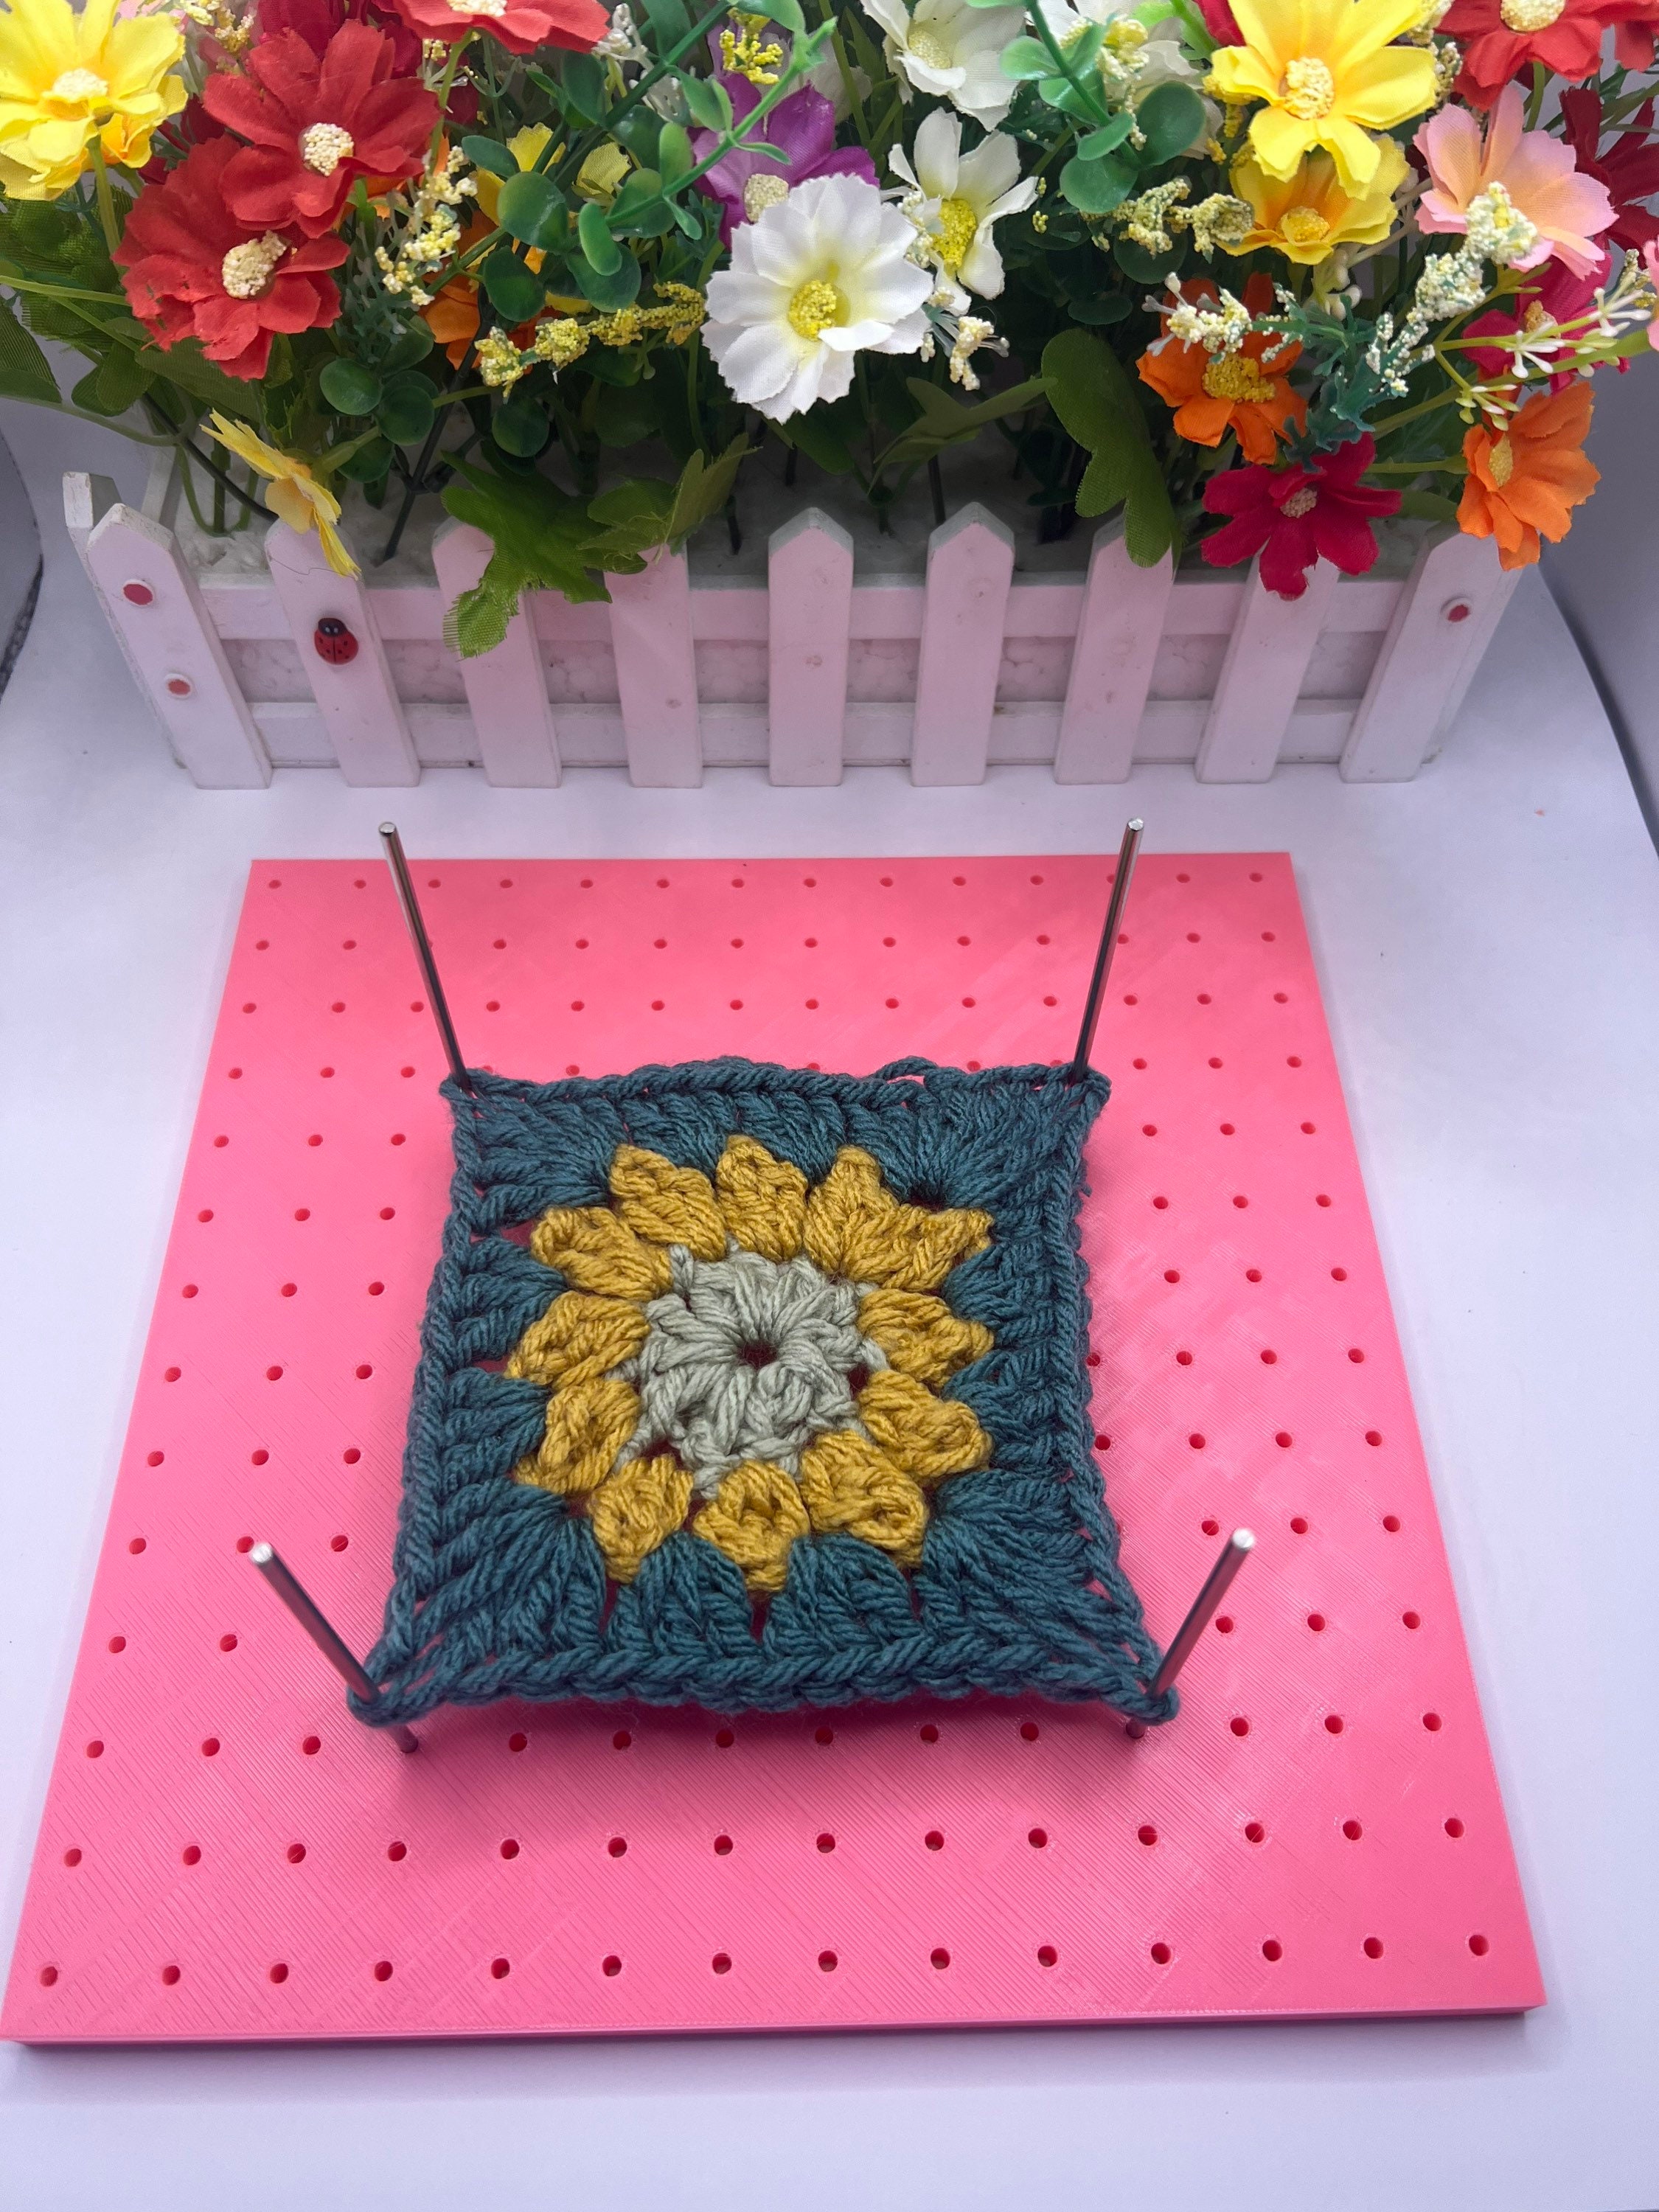 vocls crochet blocking board with pins?granny square blocking